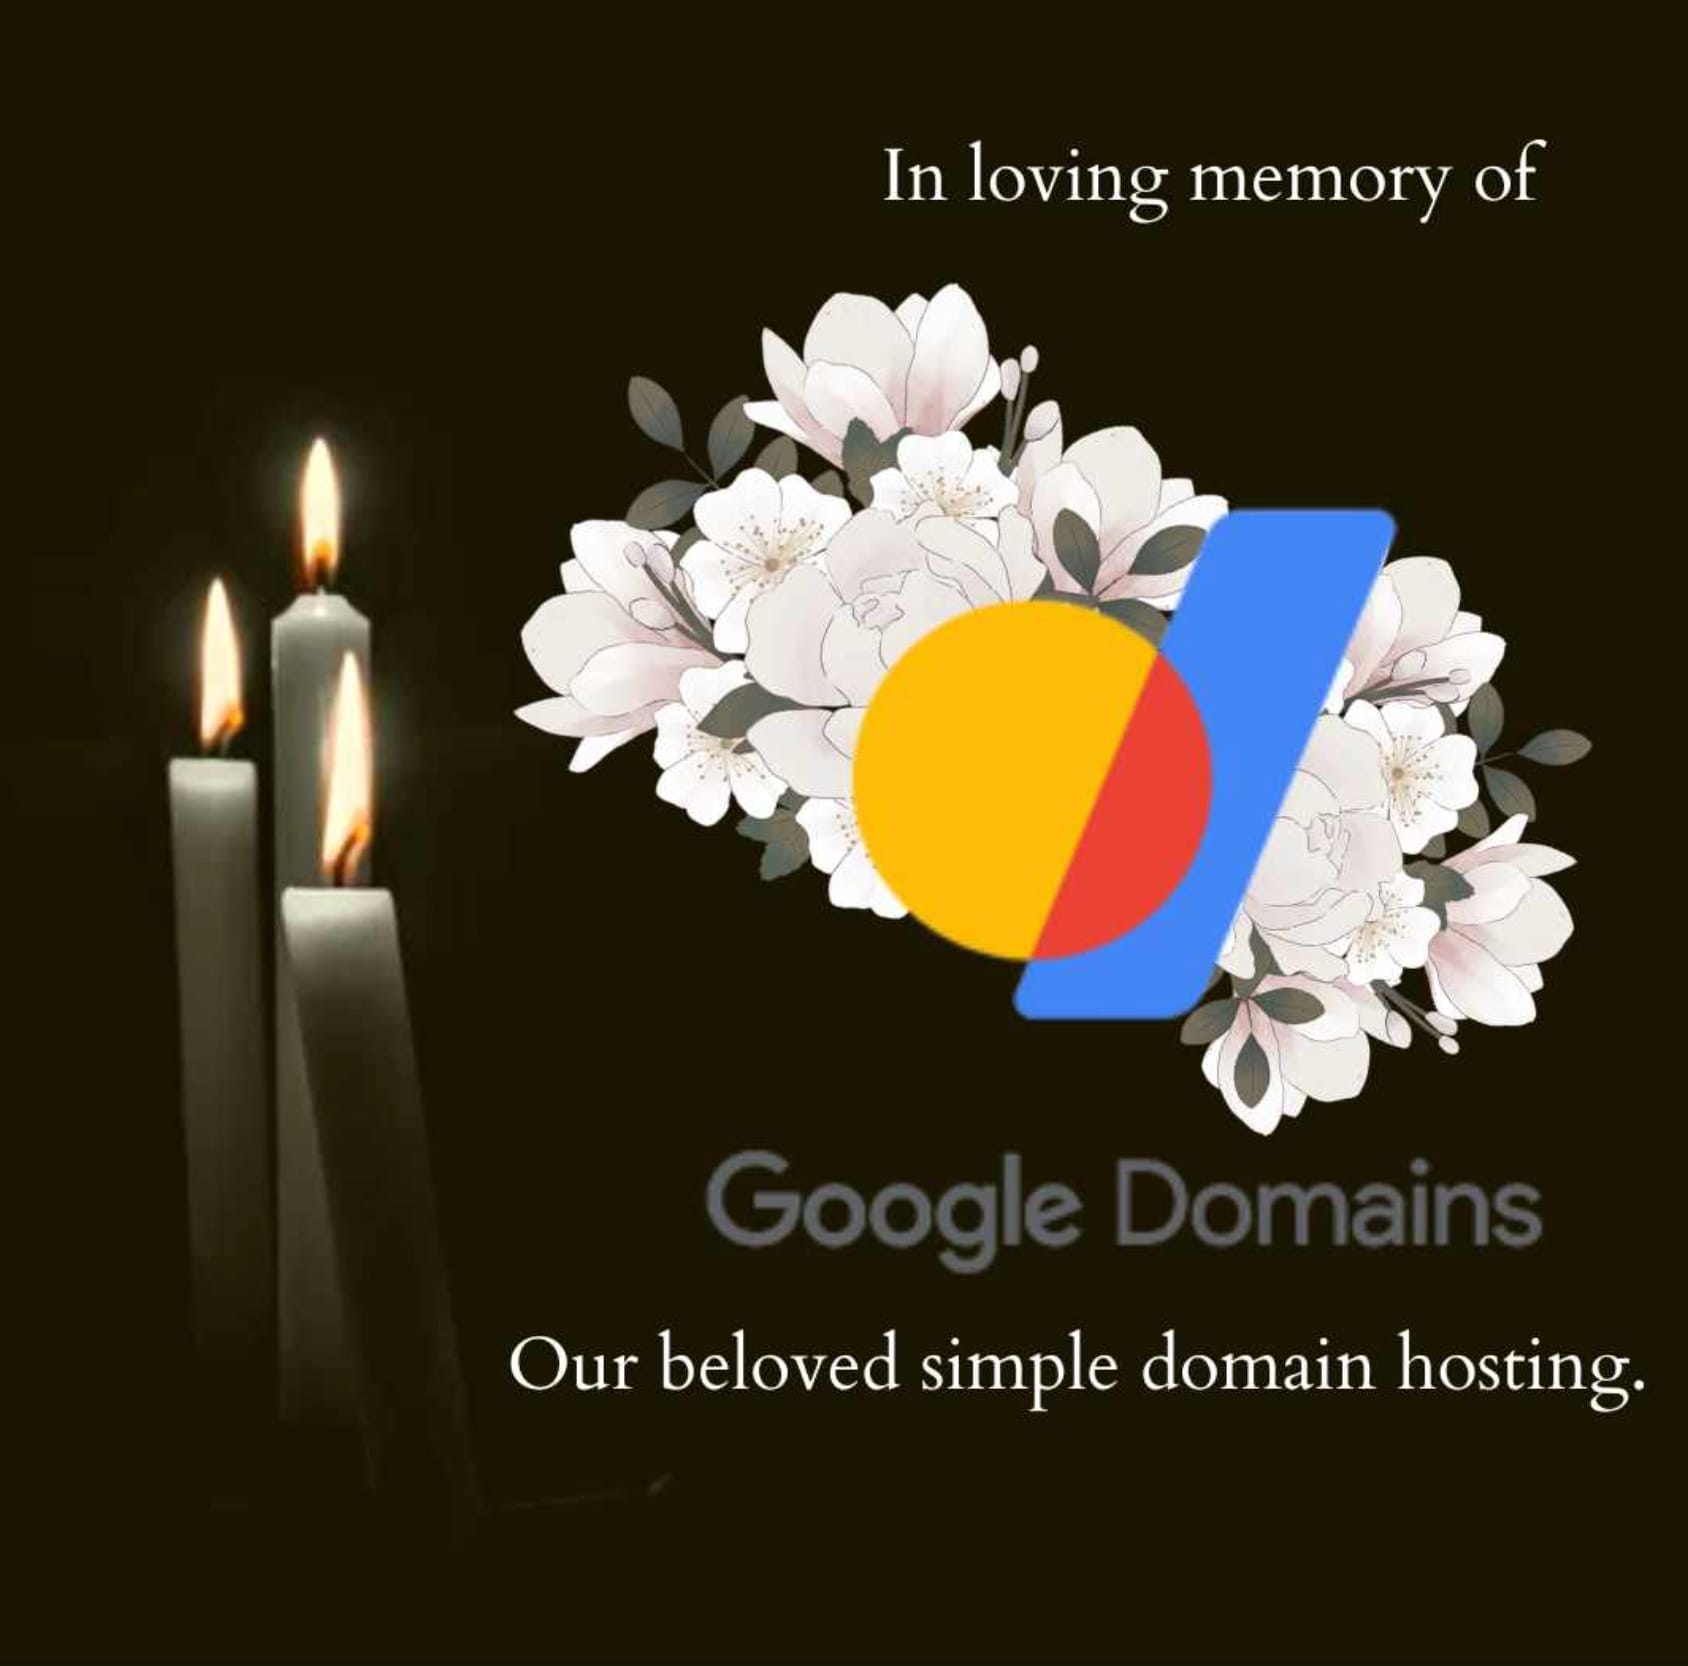 In loving memory of Google Domains, our beloved simple domain hosting.